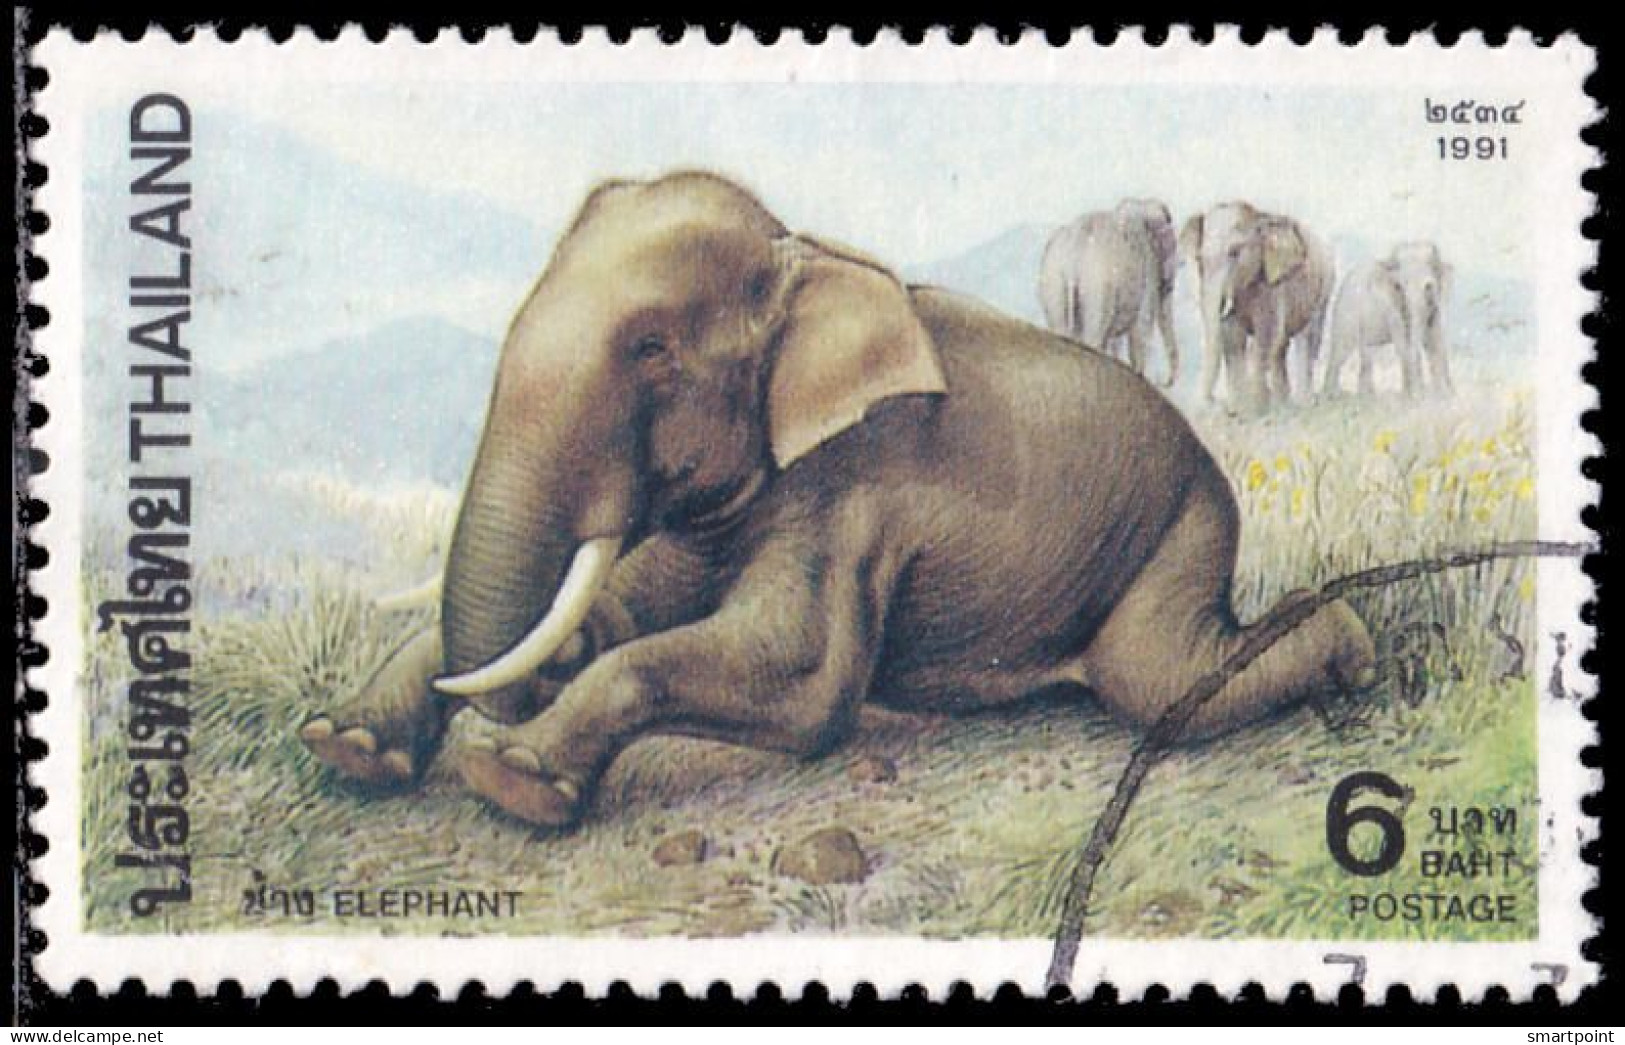 Thailand Stamp 1991 Elephants 6 Baht - Used - Thailand